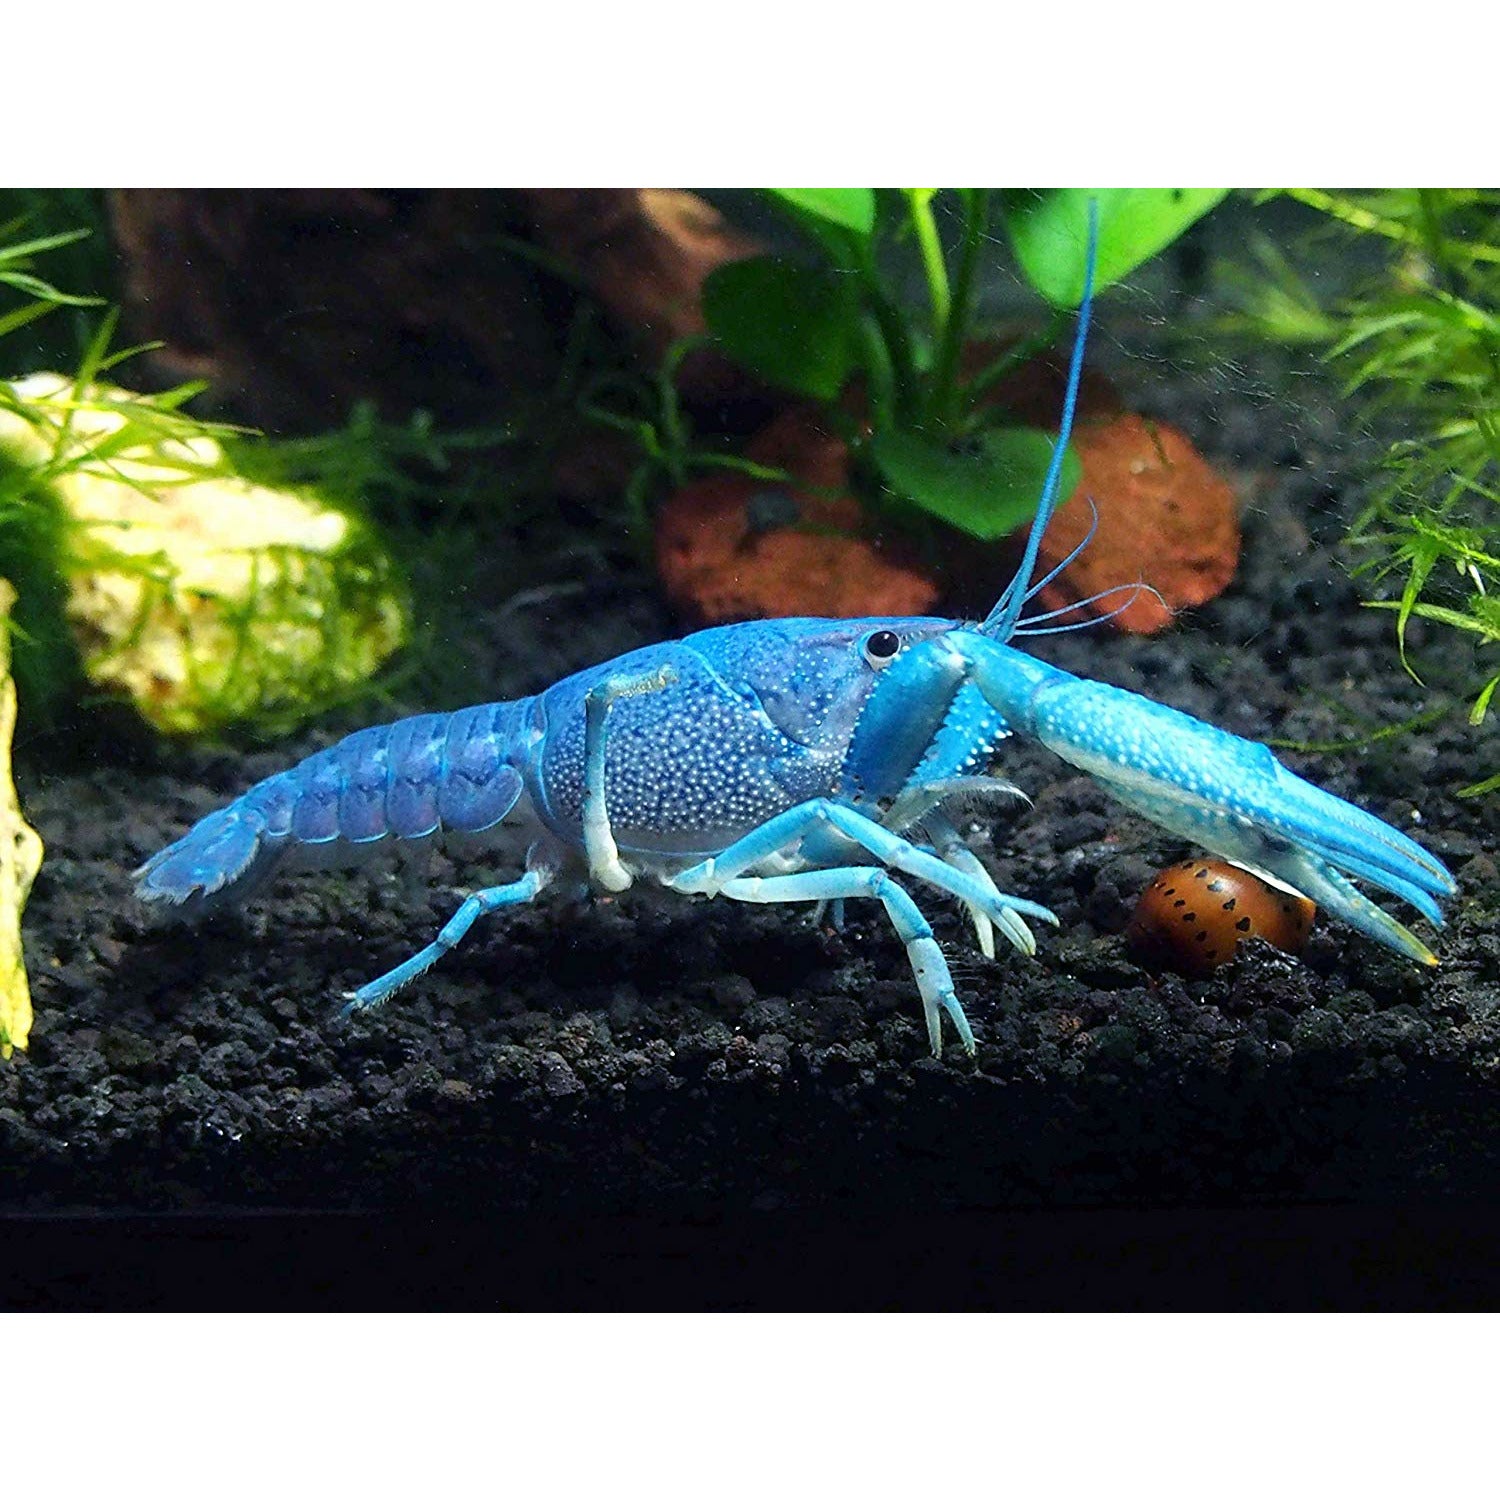 Blue Lobster/Crayfish